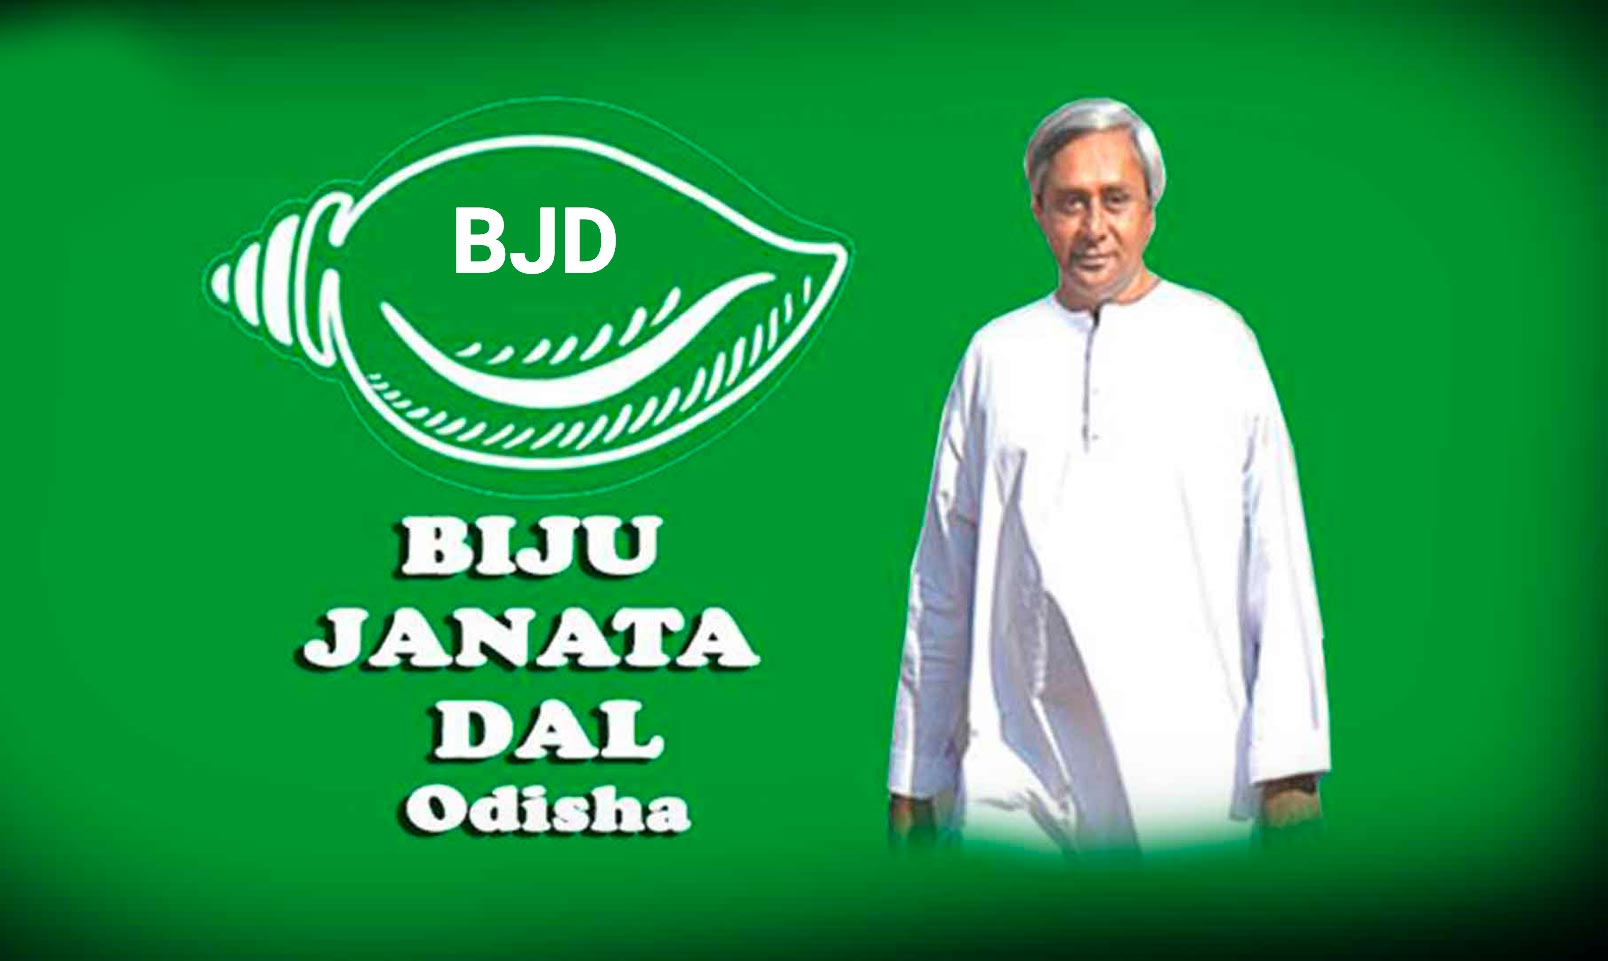 BJD Odisha 2019 Candidates